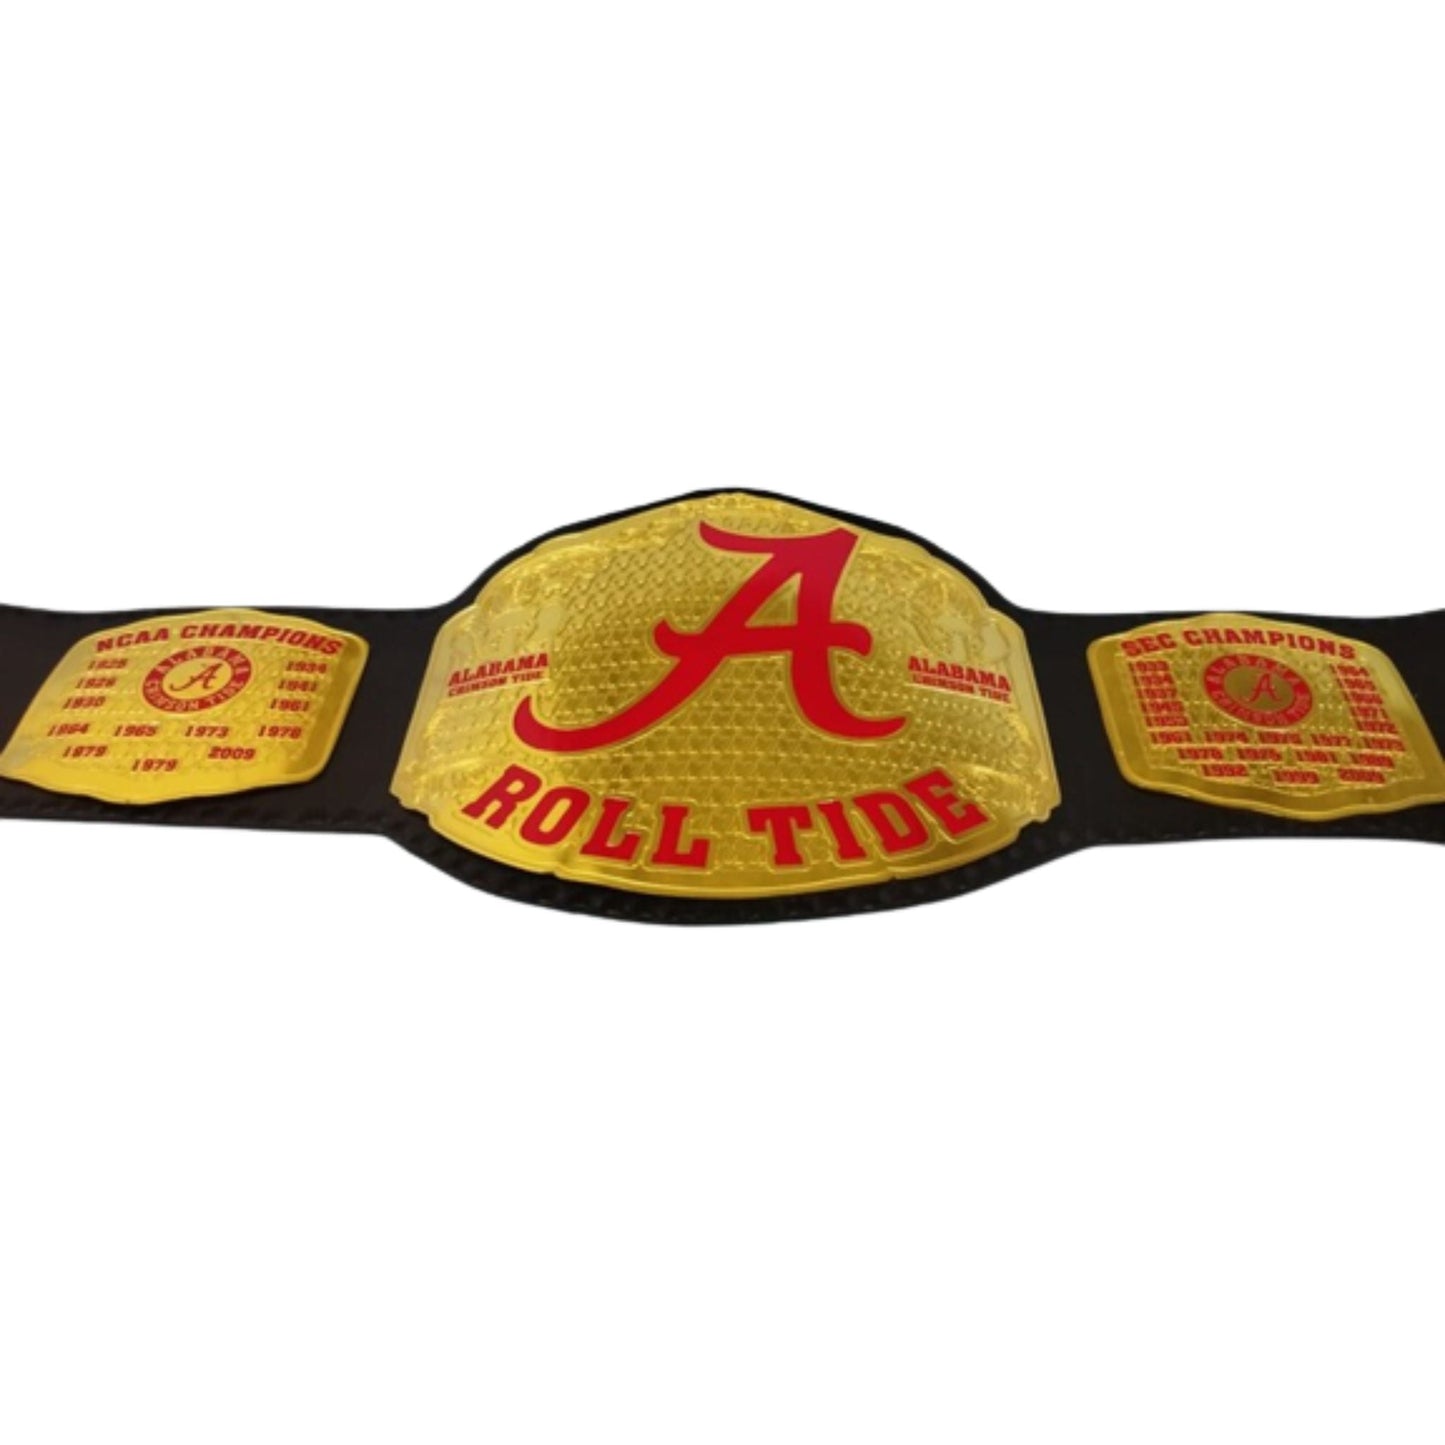 Alabama Roll Tide NFL Championship Replica Title Belt